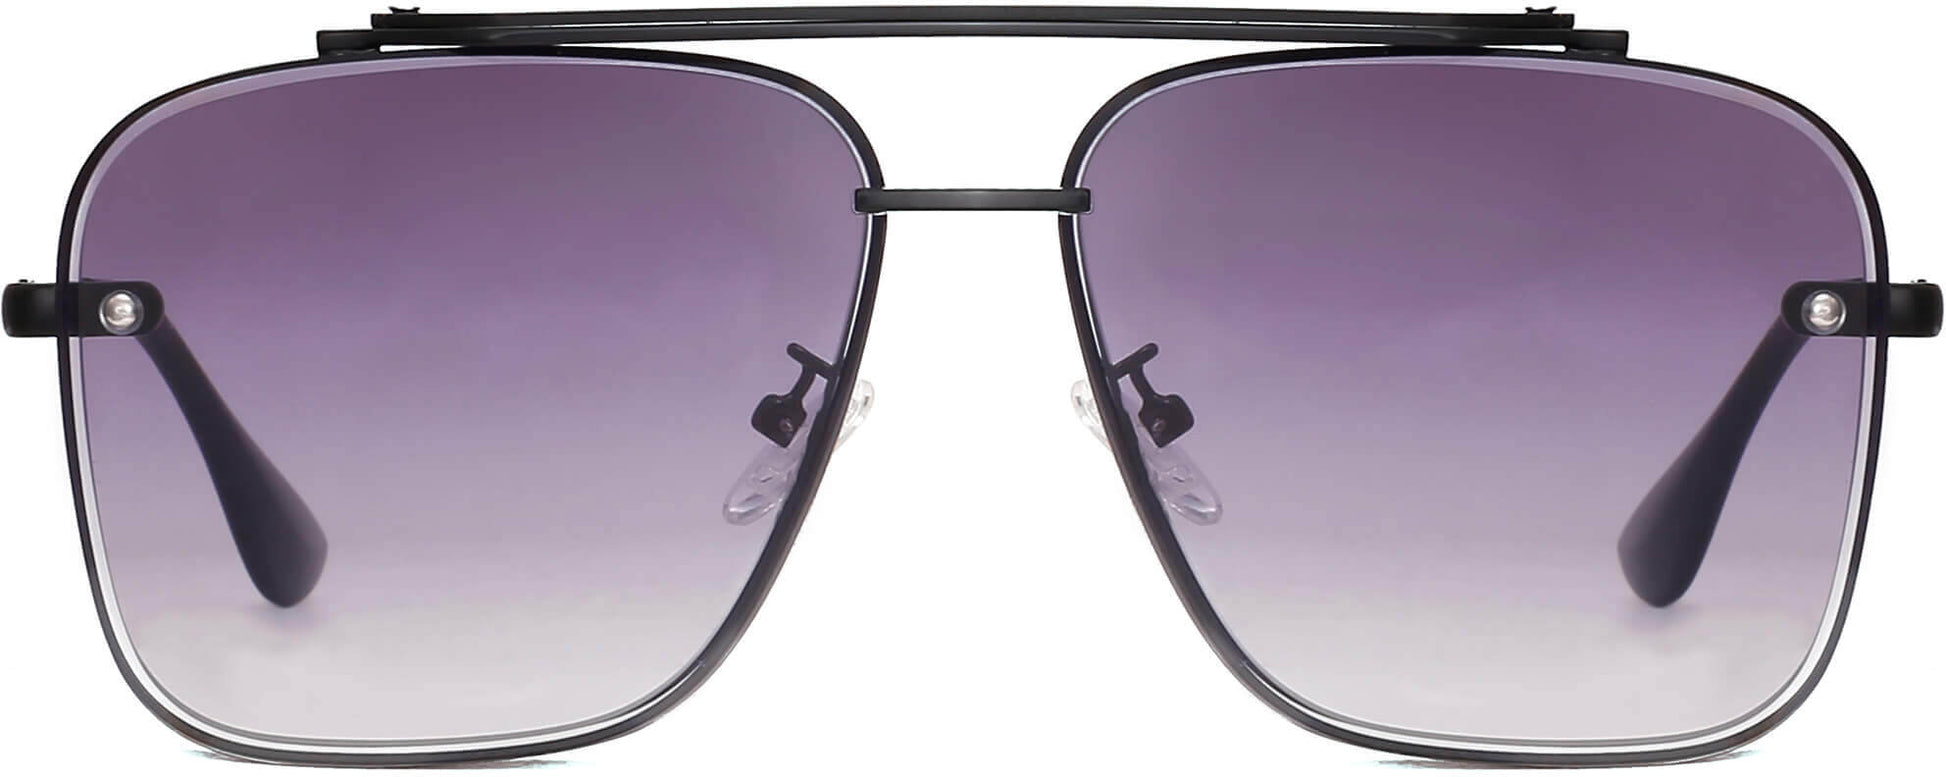 Luke Black Stainless steel Sunglasses from ANRRI